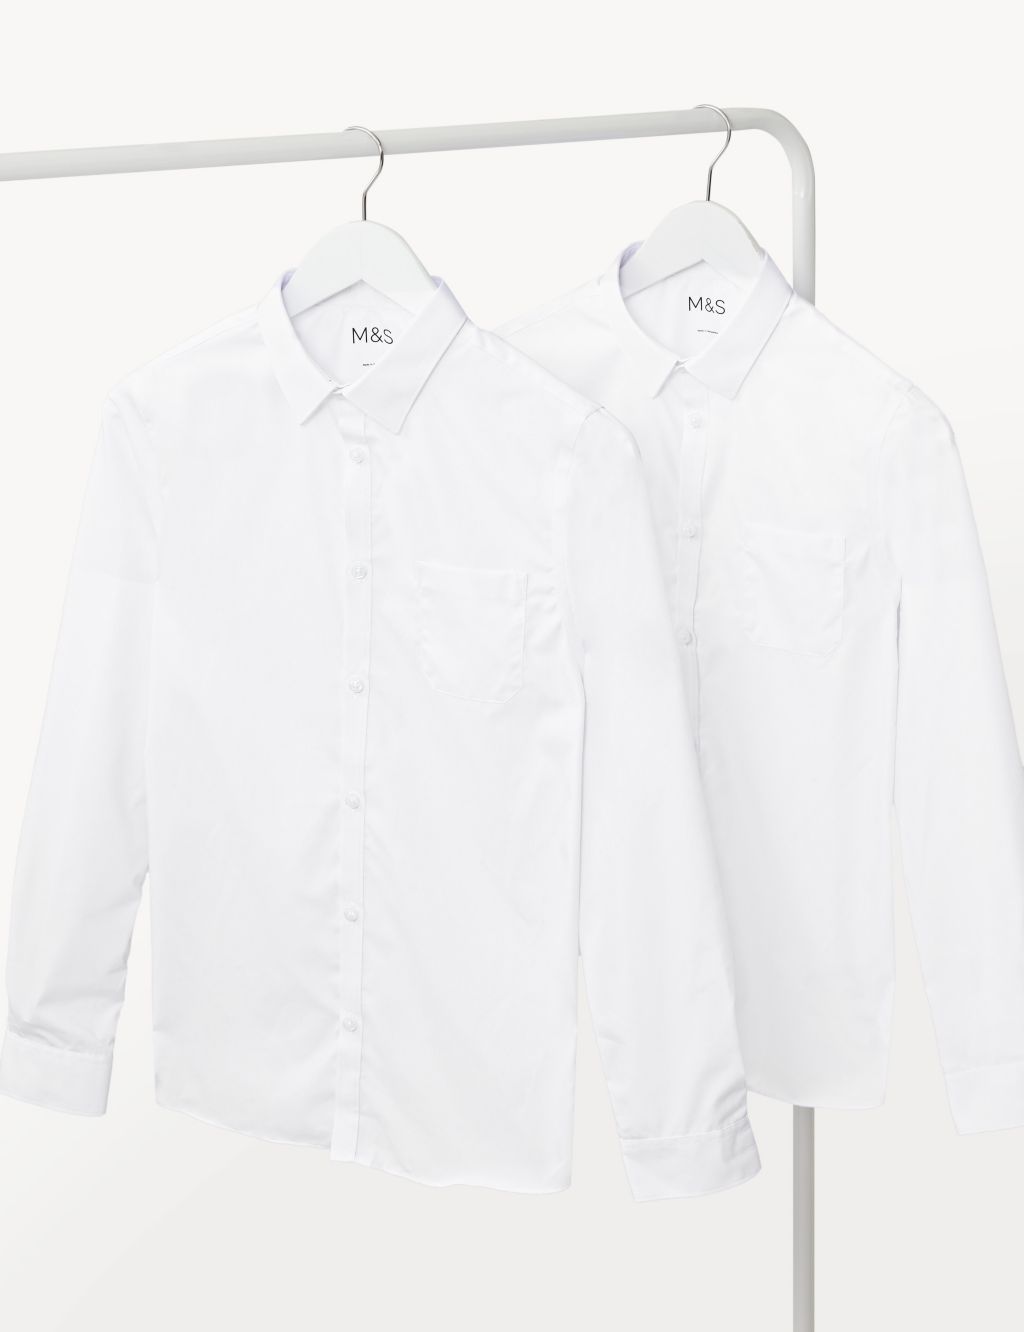 2pk Boys' Slim Fit Non-Iron School Shirts (2-18 Yrs) image 1